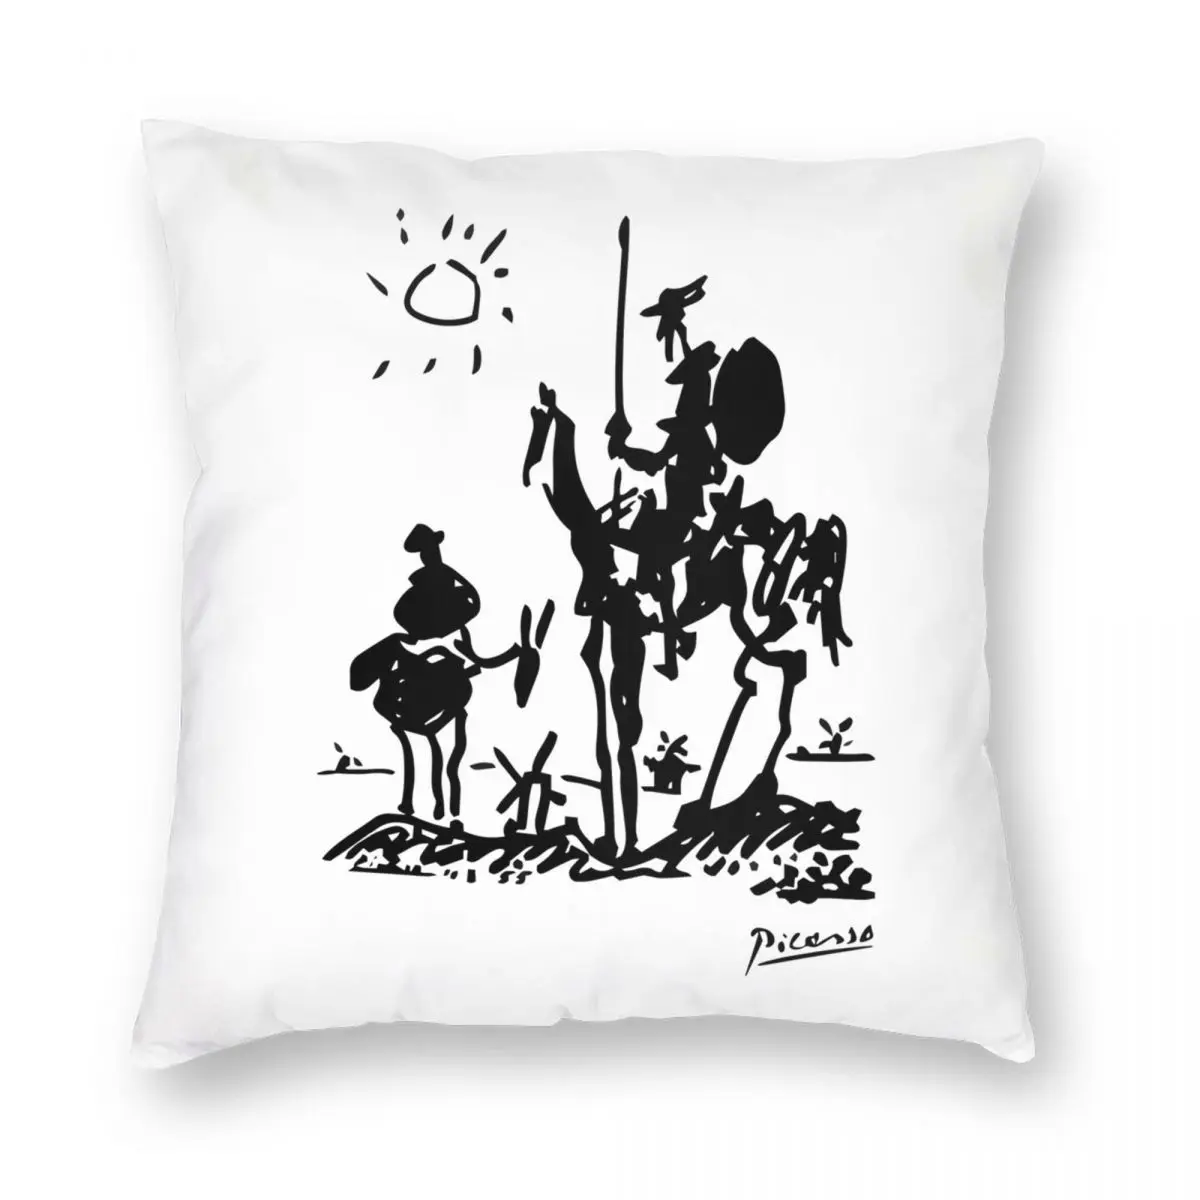 

Pablo Picasso Don Quixote Square Pillowcase Polyester Linen Velvet Creative Zip Decor Pillow Case Home Cushion Cover